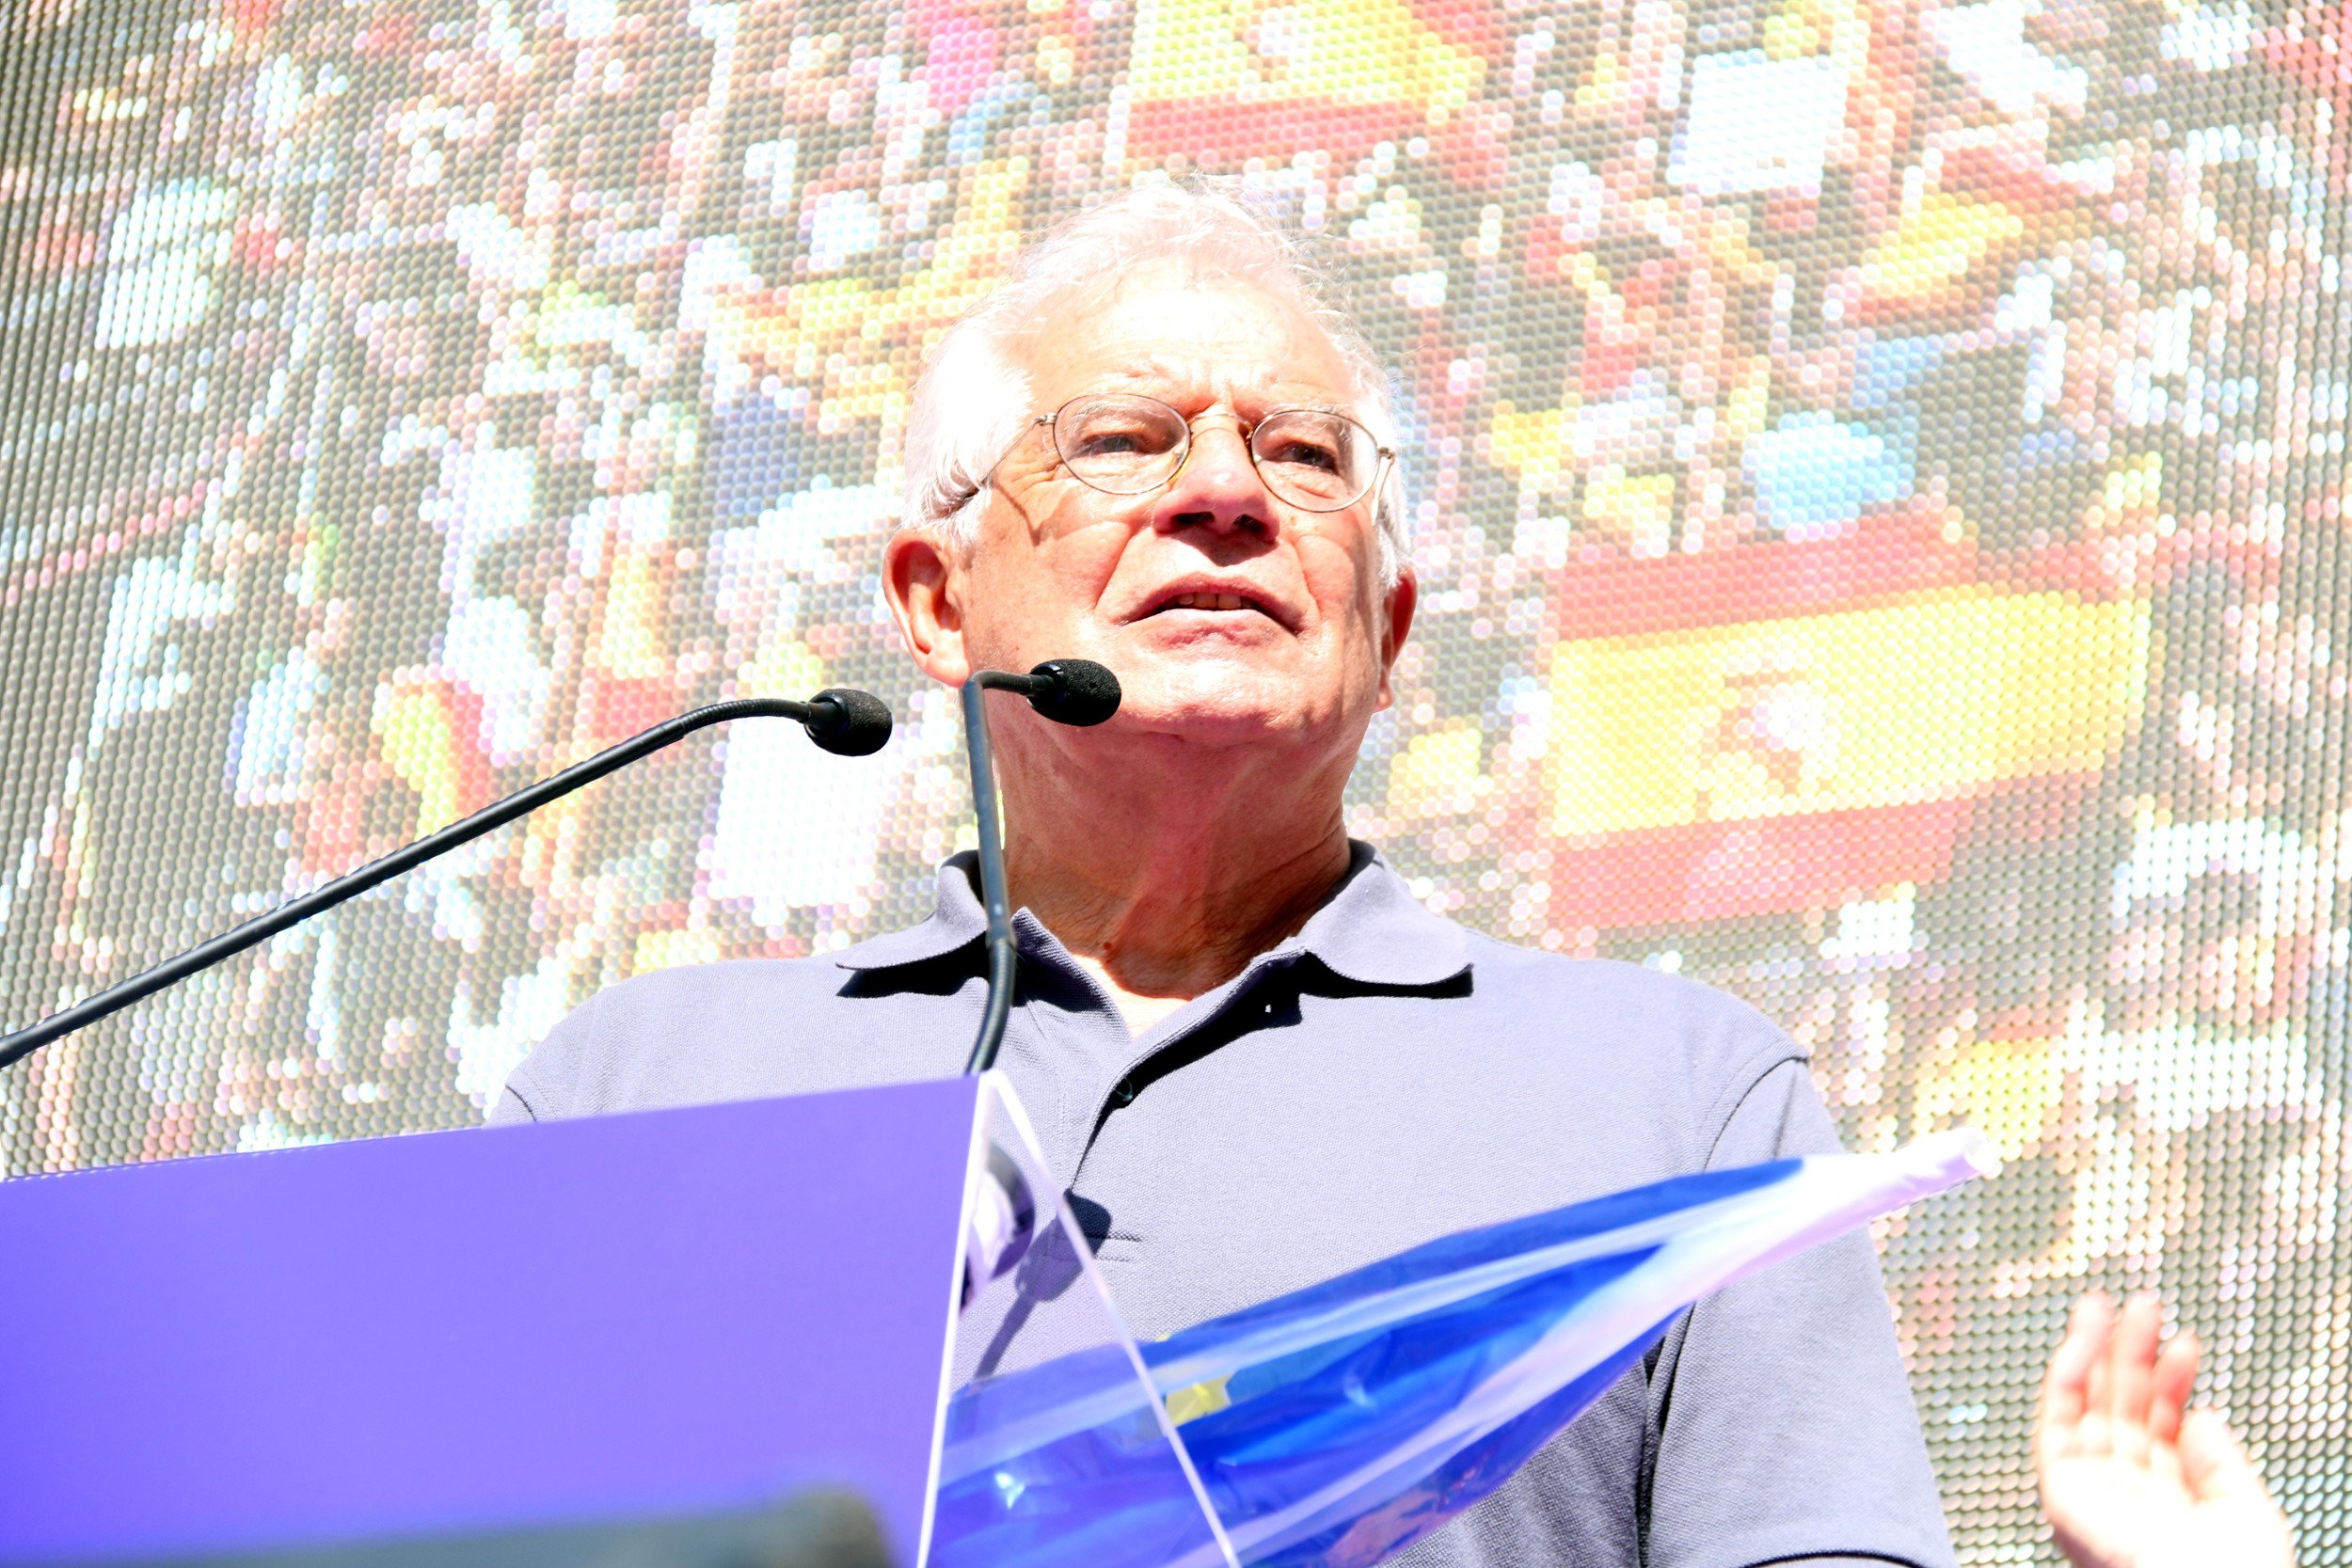 Los periodistas de TV3 critican que Borrell les quiera "desinfectar"